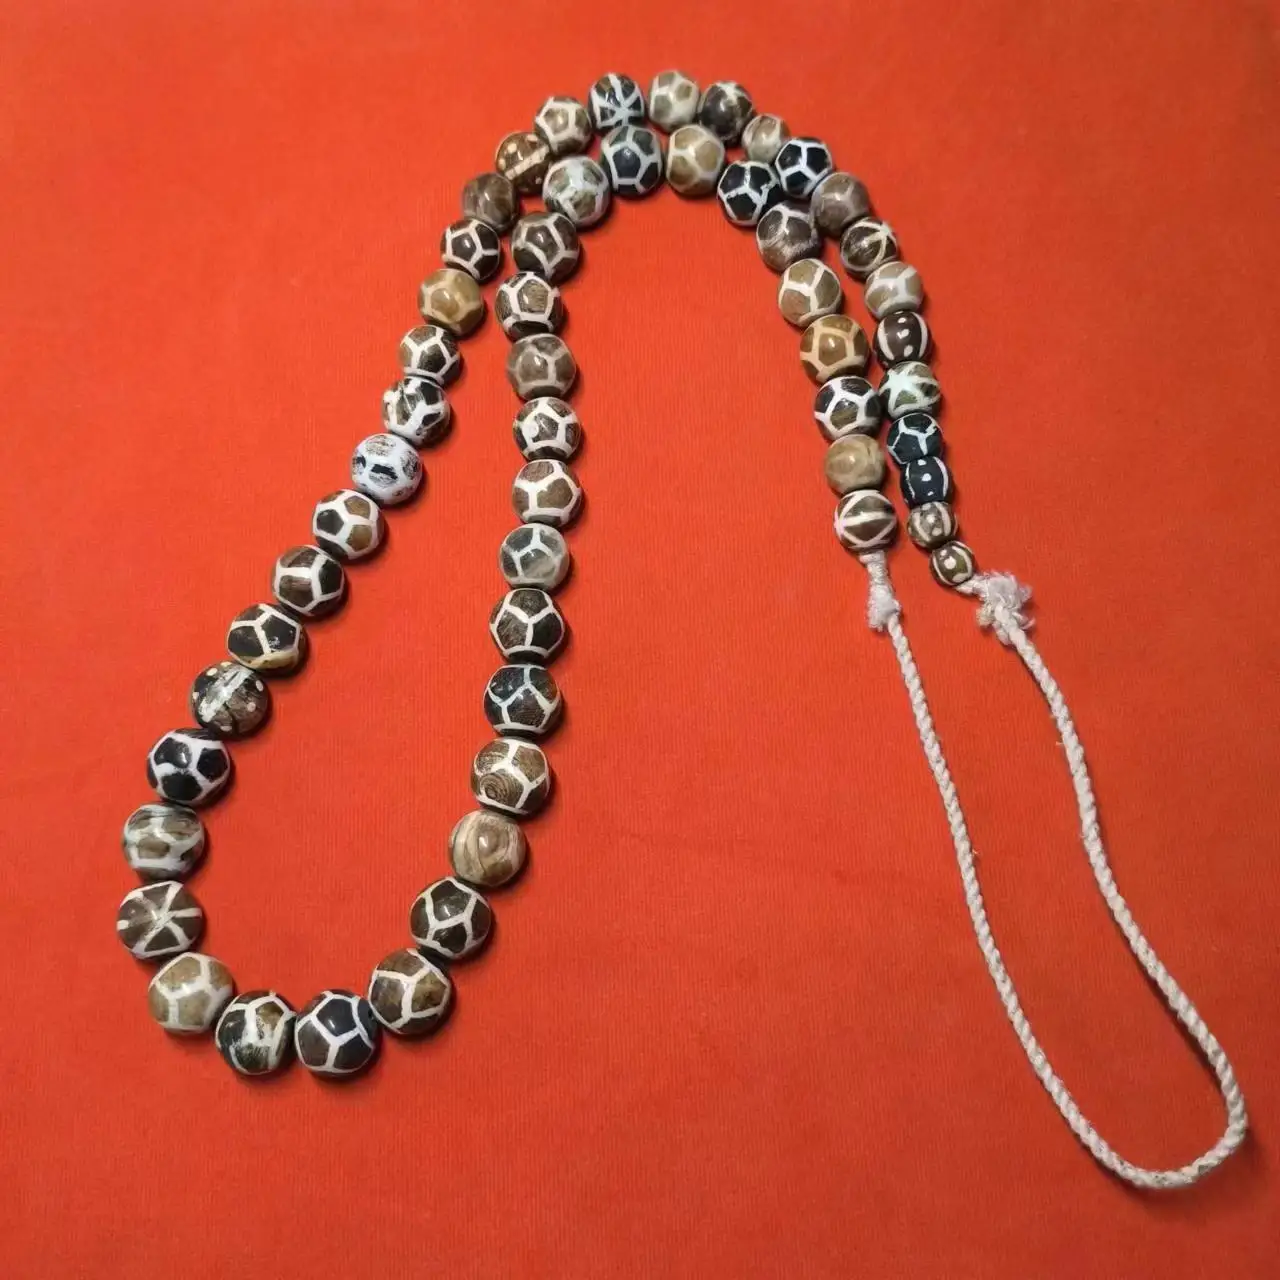 

1pcs/lot Natural Bontic Jade Tortoise Shell Ball Necklace Millennium-old craftsmanship meaning longevity bracelet jewelry taki